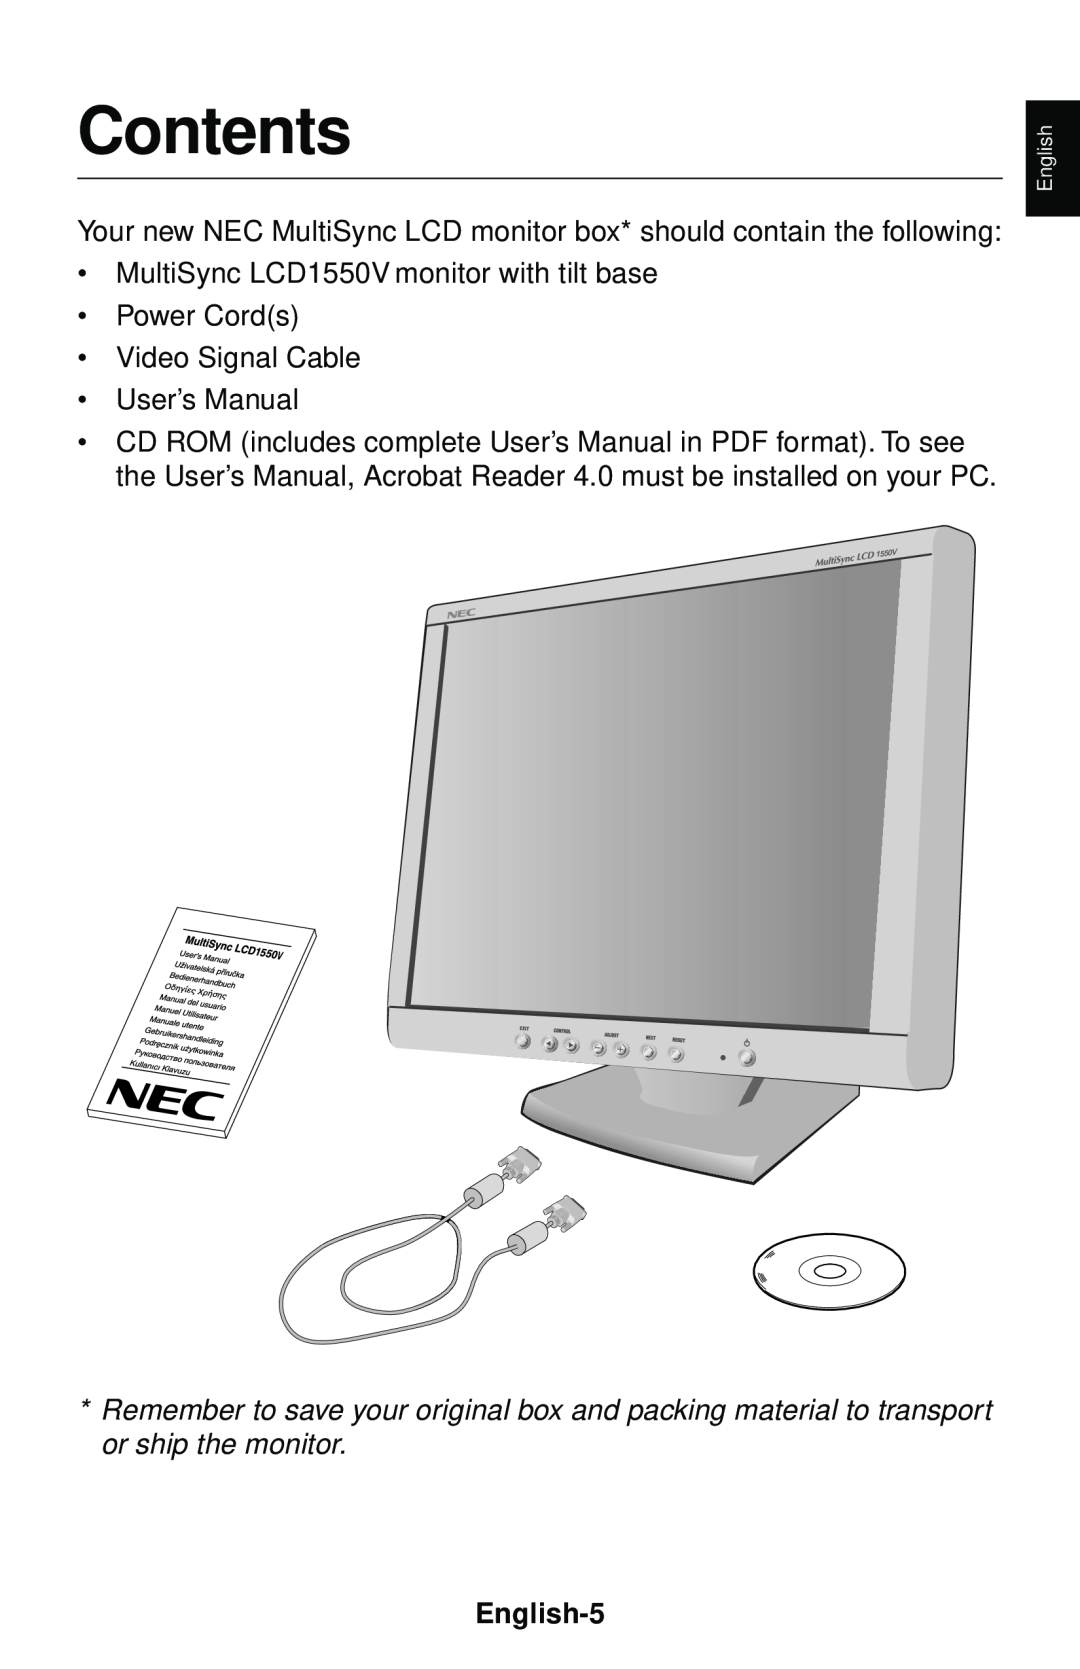 NEC LCD1550V user manual Contents, English-5 